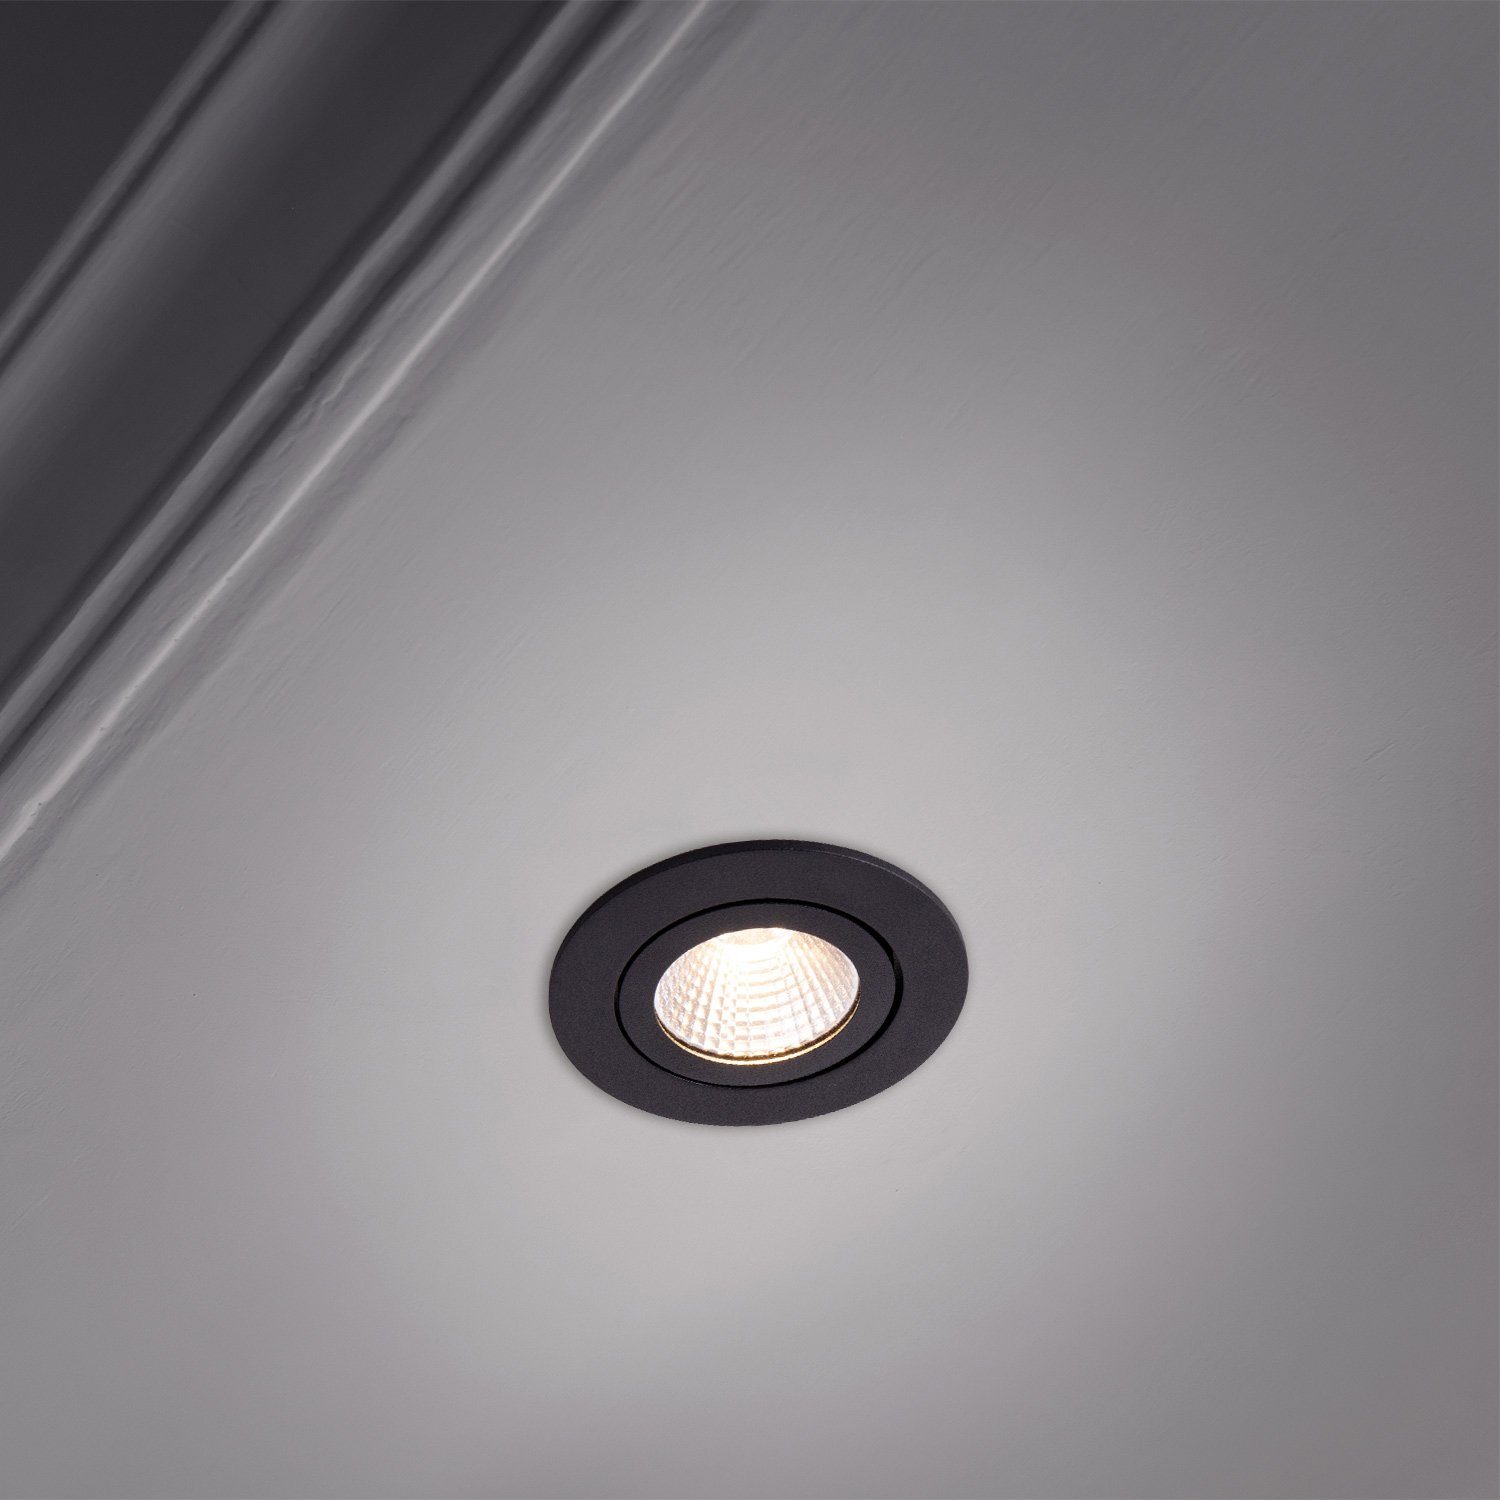 Paco Home LED Einbauleuchte Spotlight LED Einbaustrahler Strahler Flach LED Warmweiß, Rita, wechselbar, dimmbar Schwenkbar